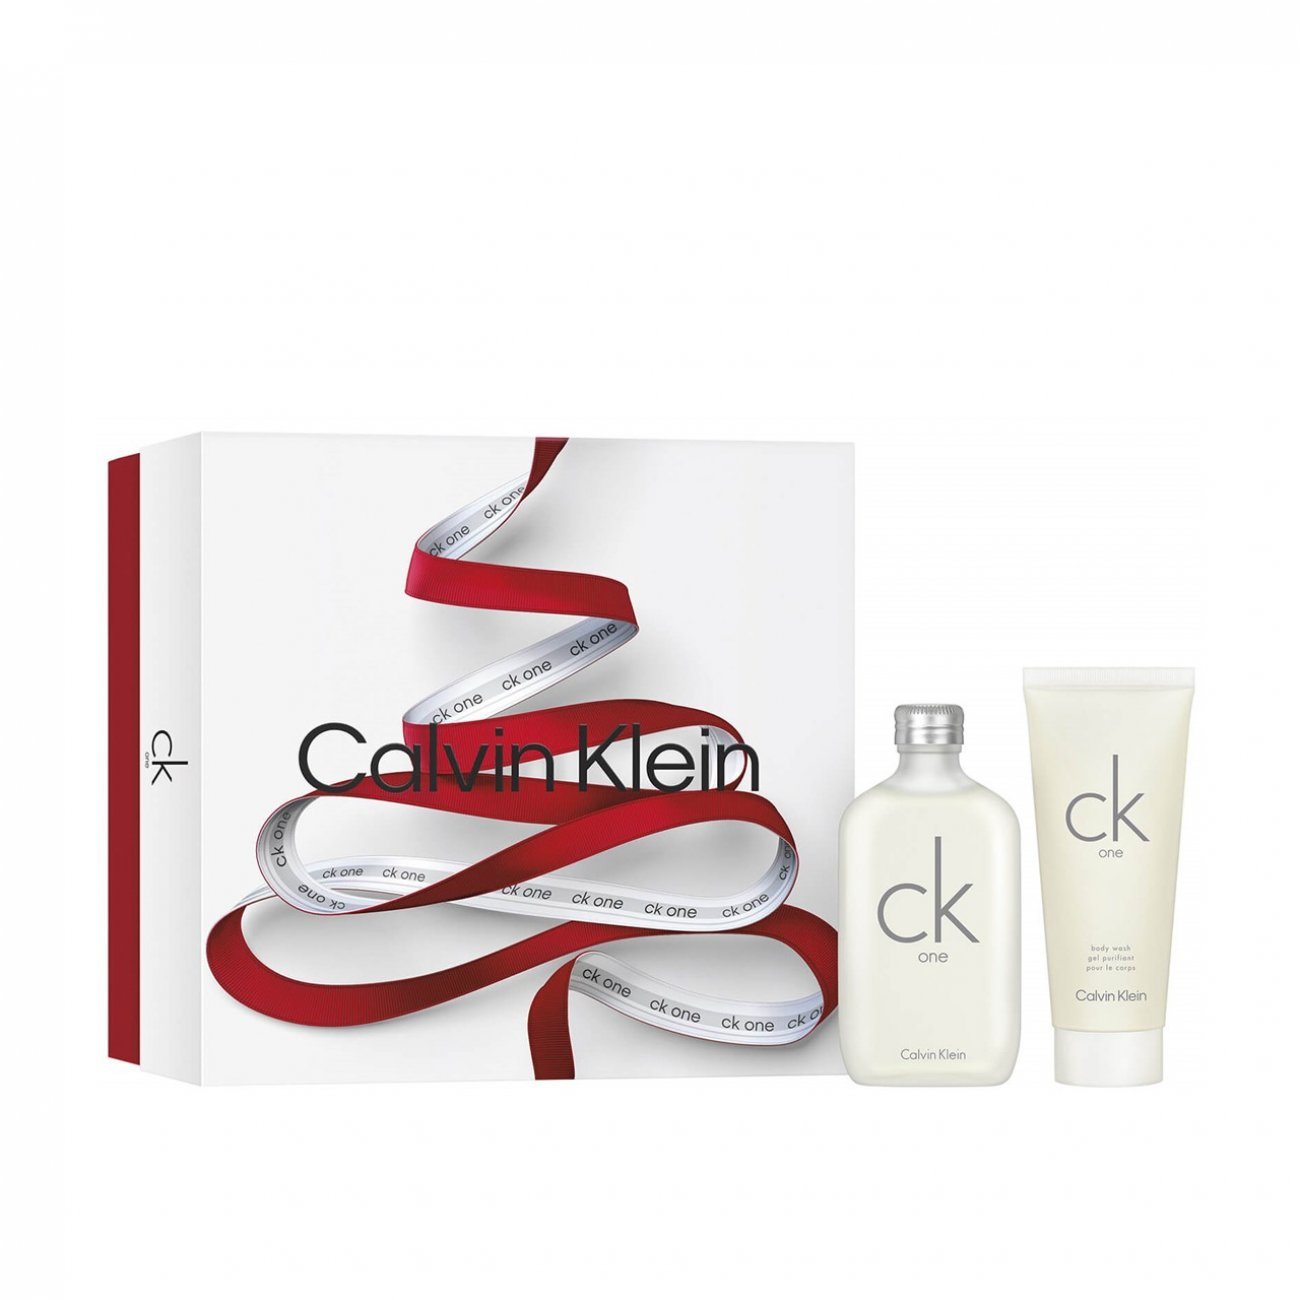 Buy GIFT SET:Calvin Klein CK One Eau de Toilette 200ml Coffret · Serbia